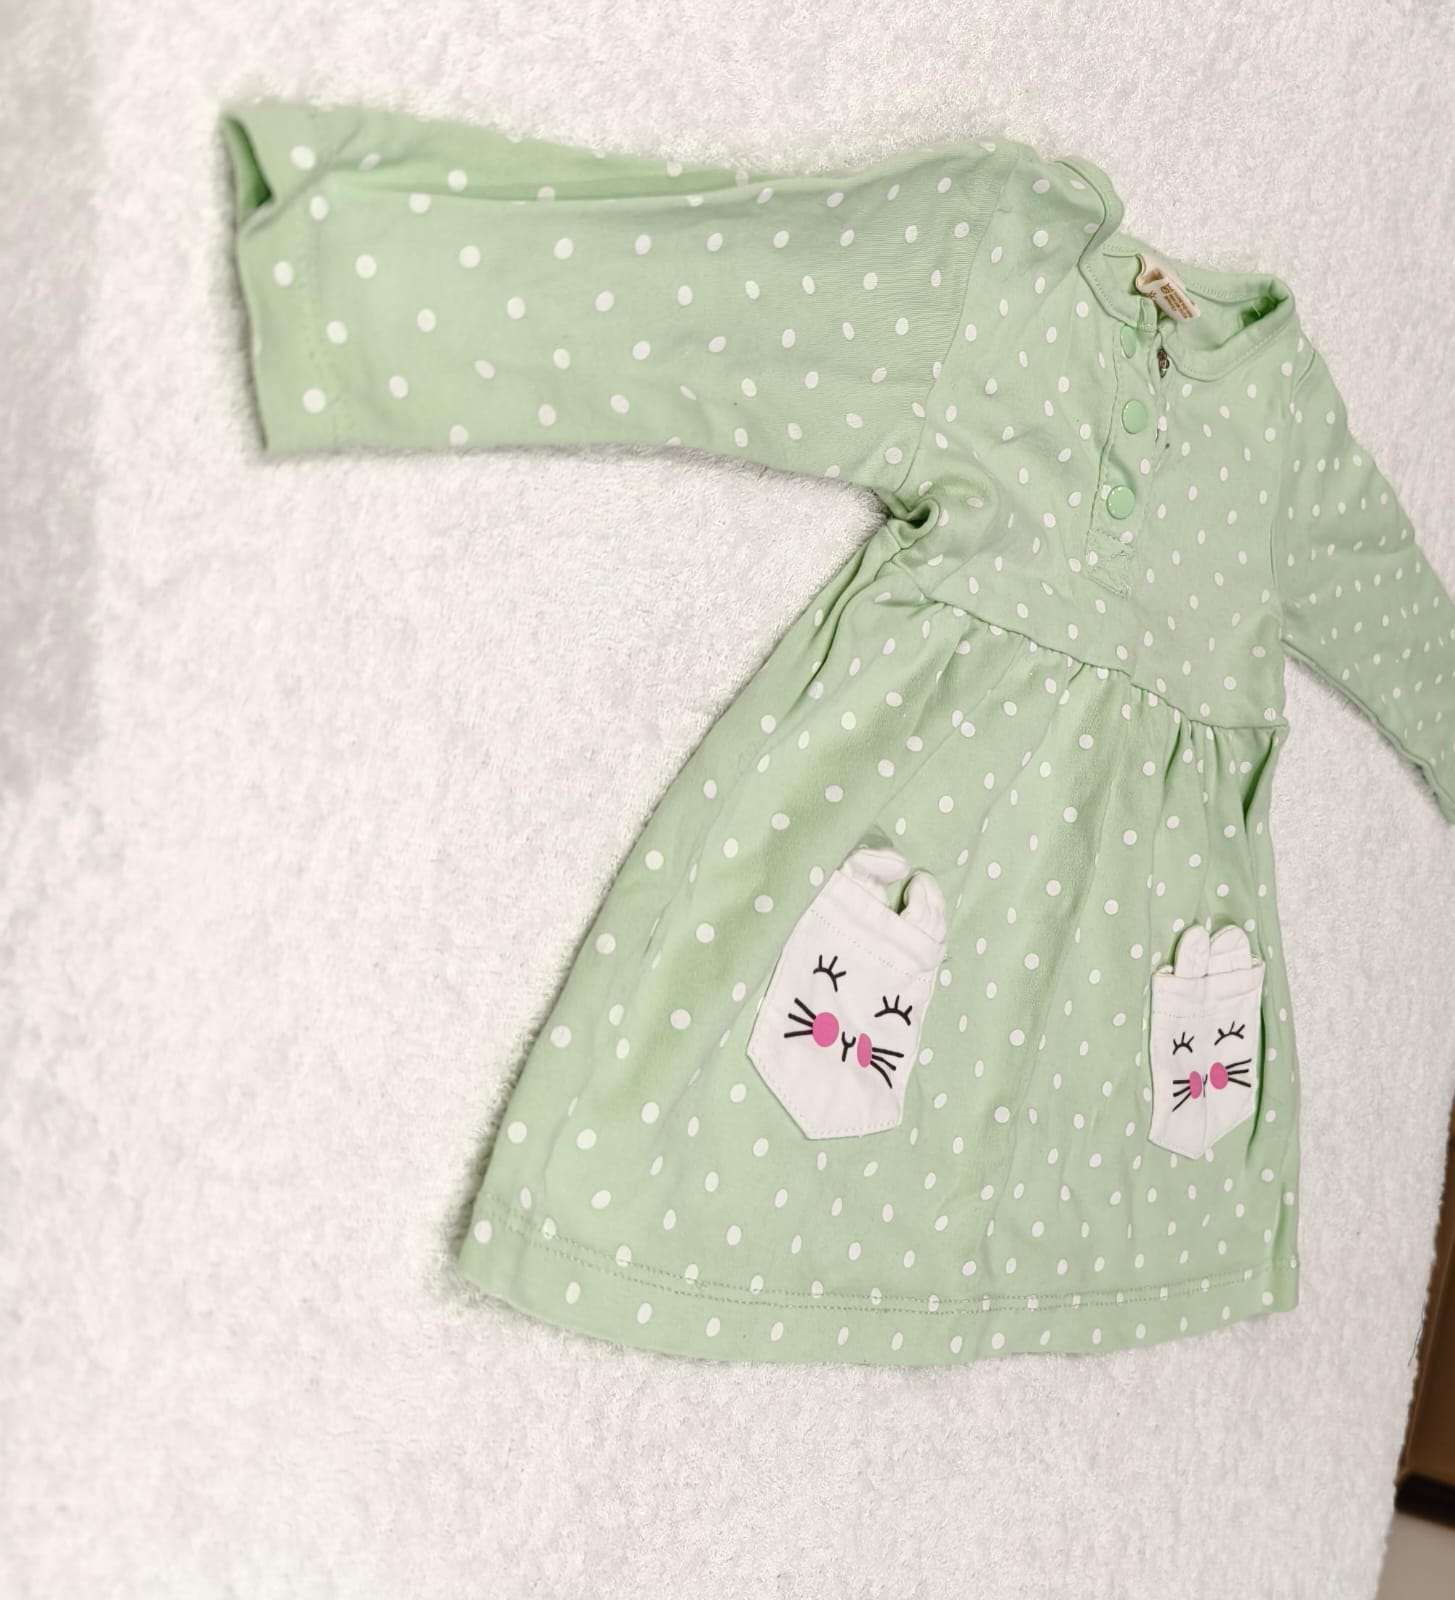 preloved cute dress for baby girl